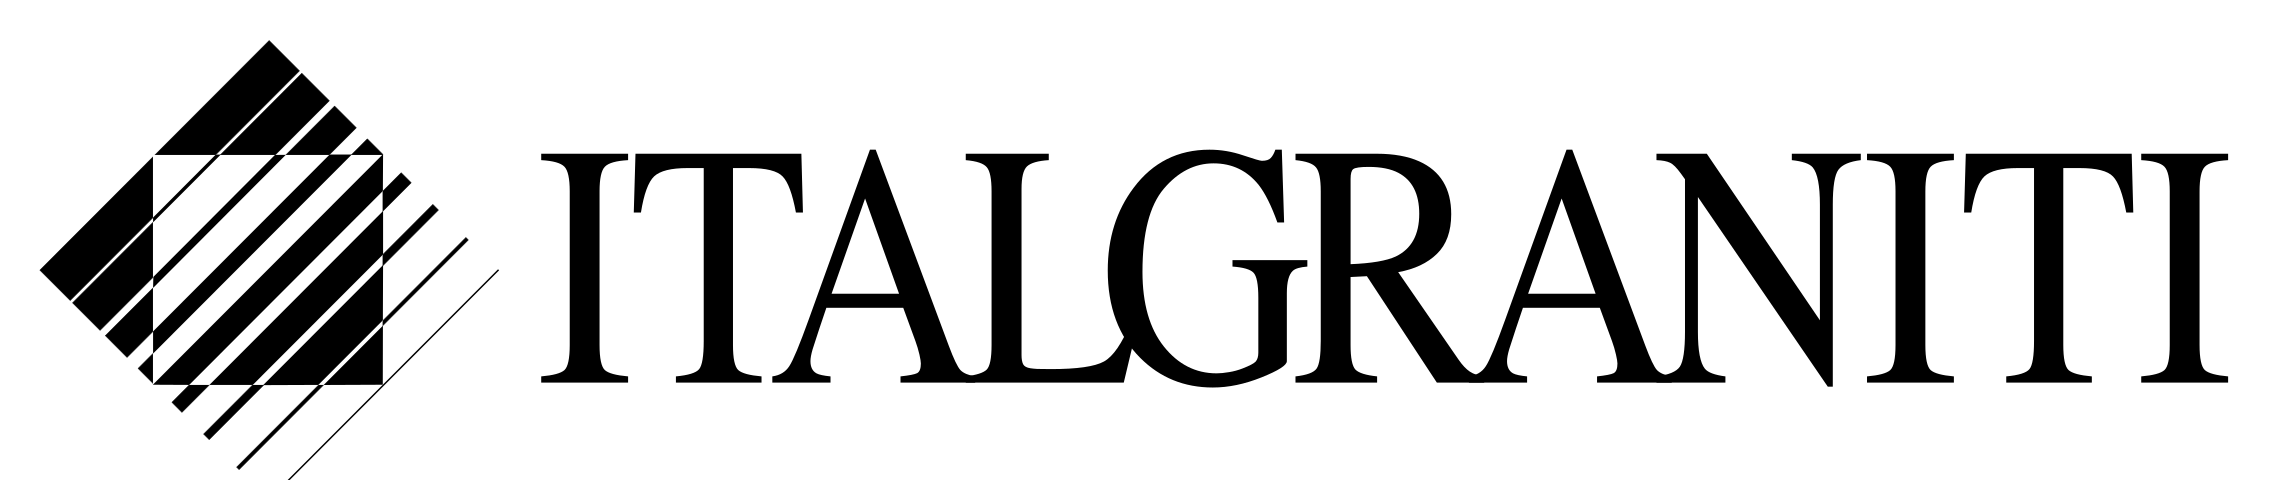 Sirt Torino - italgraniti logo png transparent e1649324509873